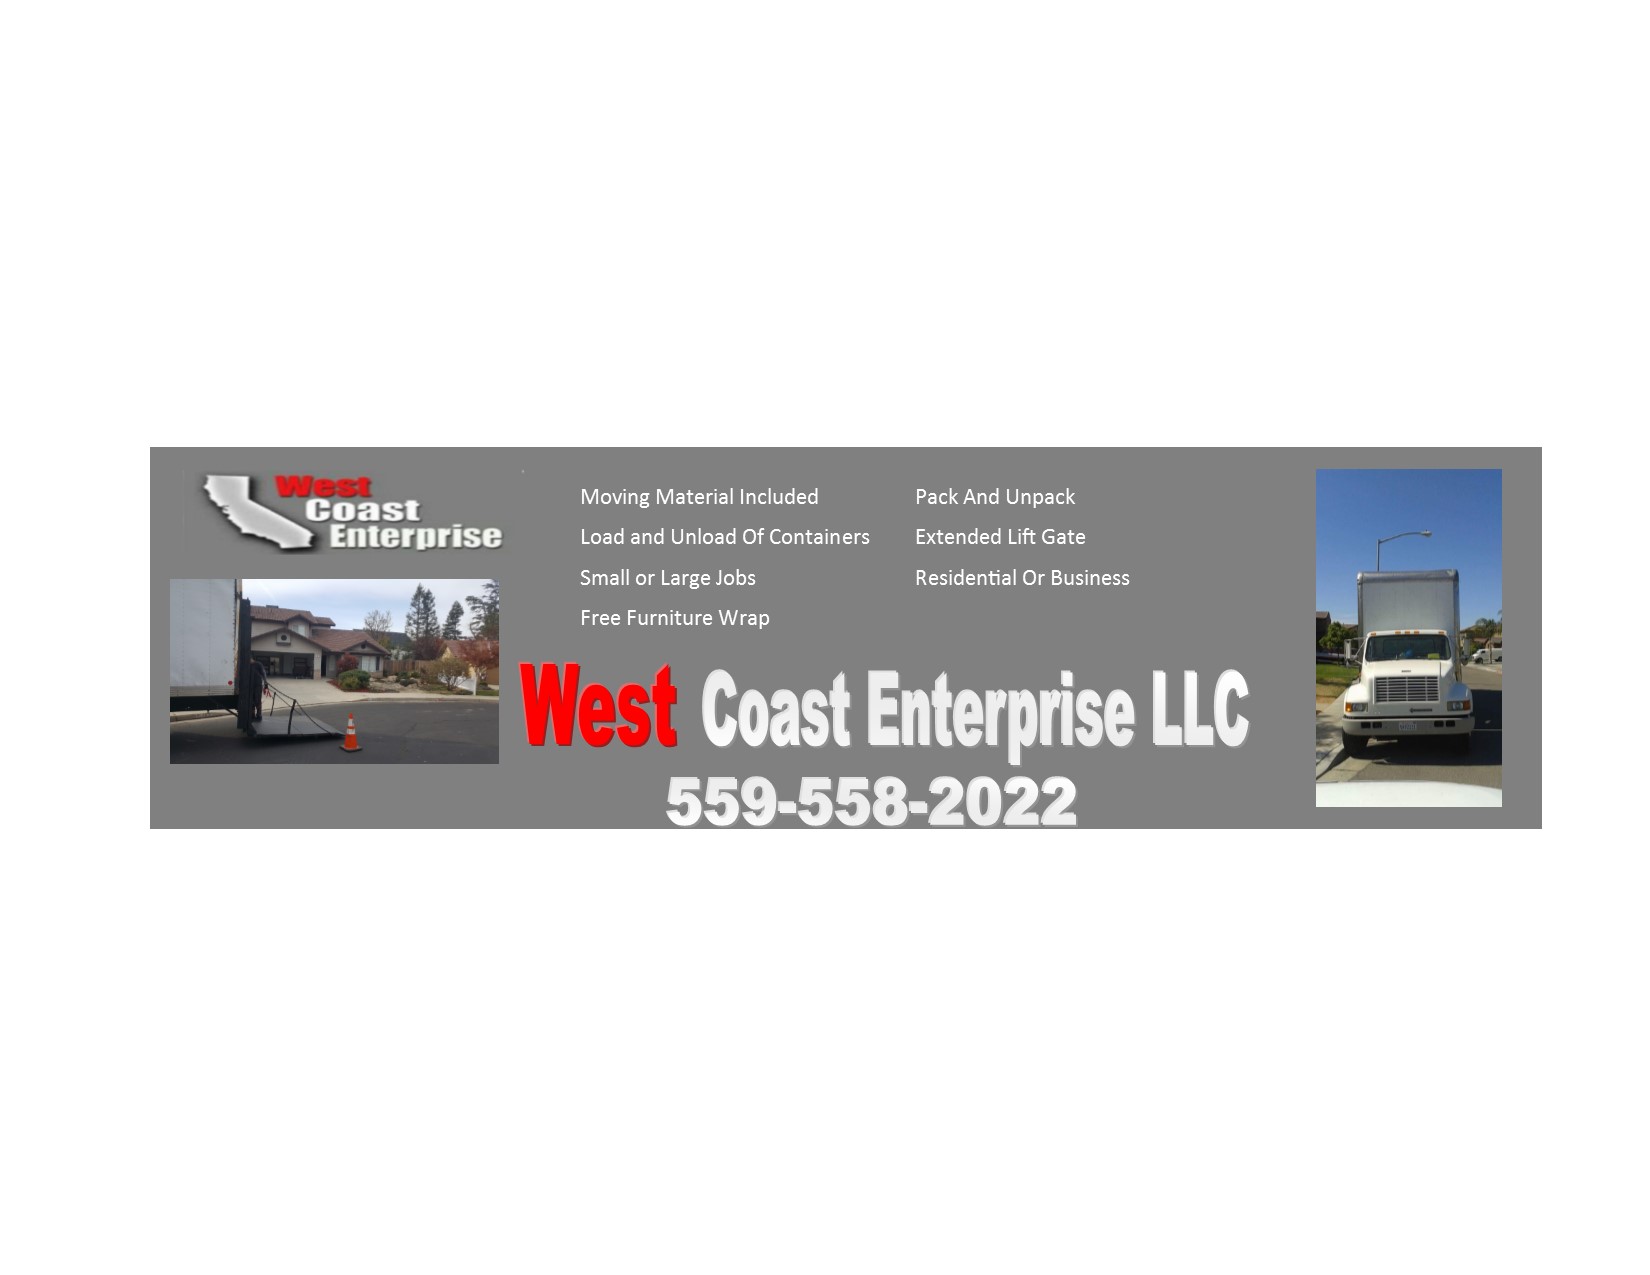 West Coast Enterprise LLC